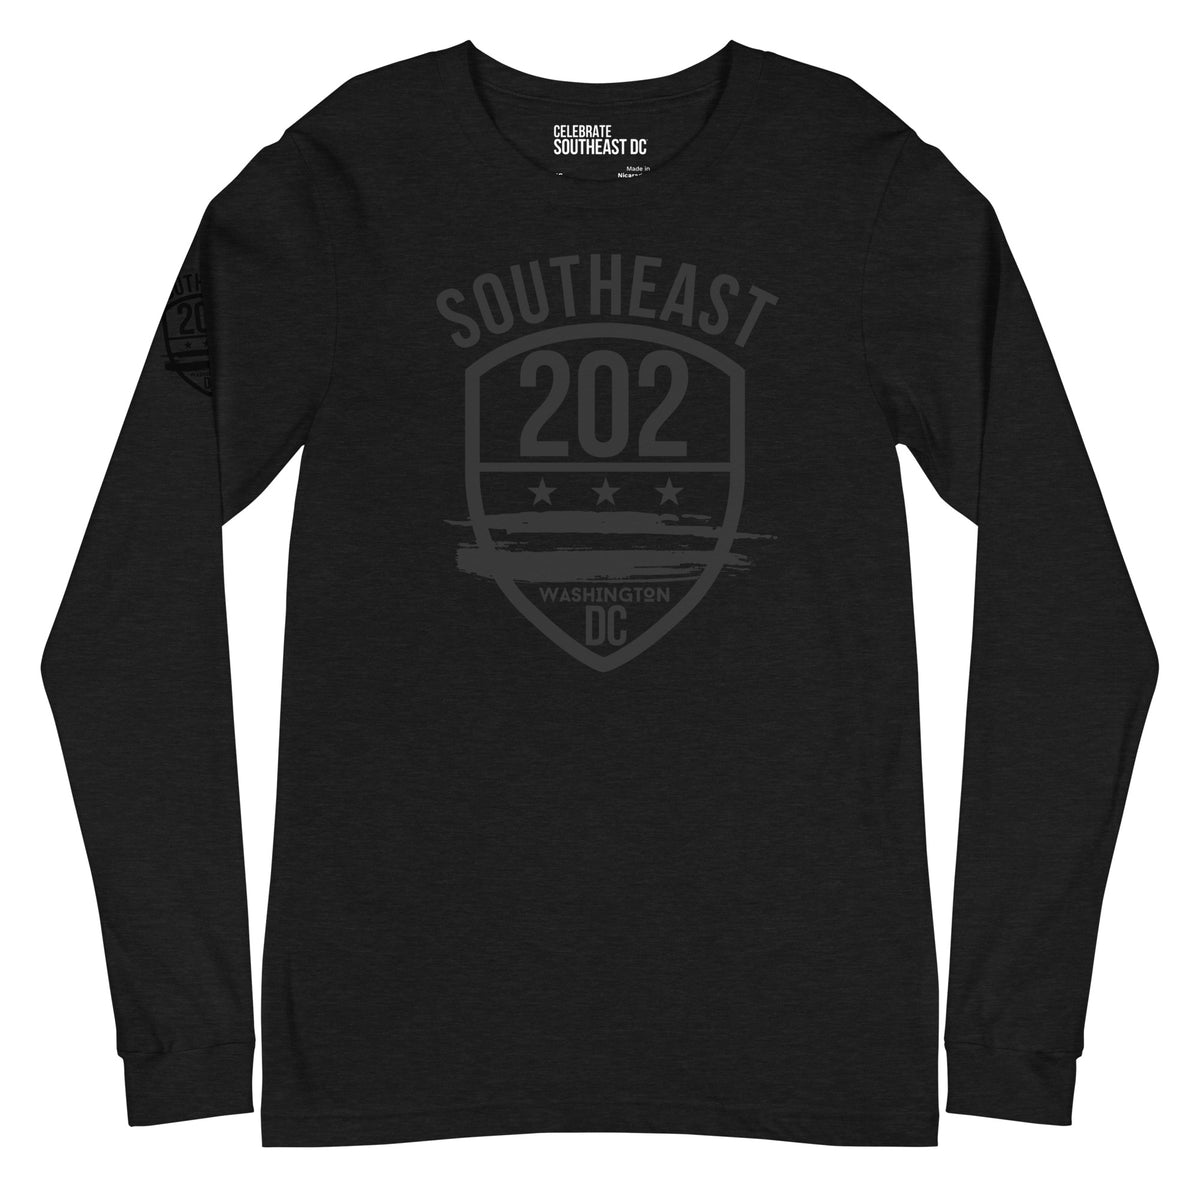 "SOUTHEAST WASHINGTON, DC /202" (Emblem) - All Black/Black Unisex Long Sleeve Tee